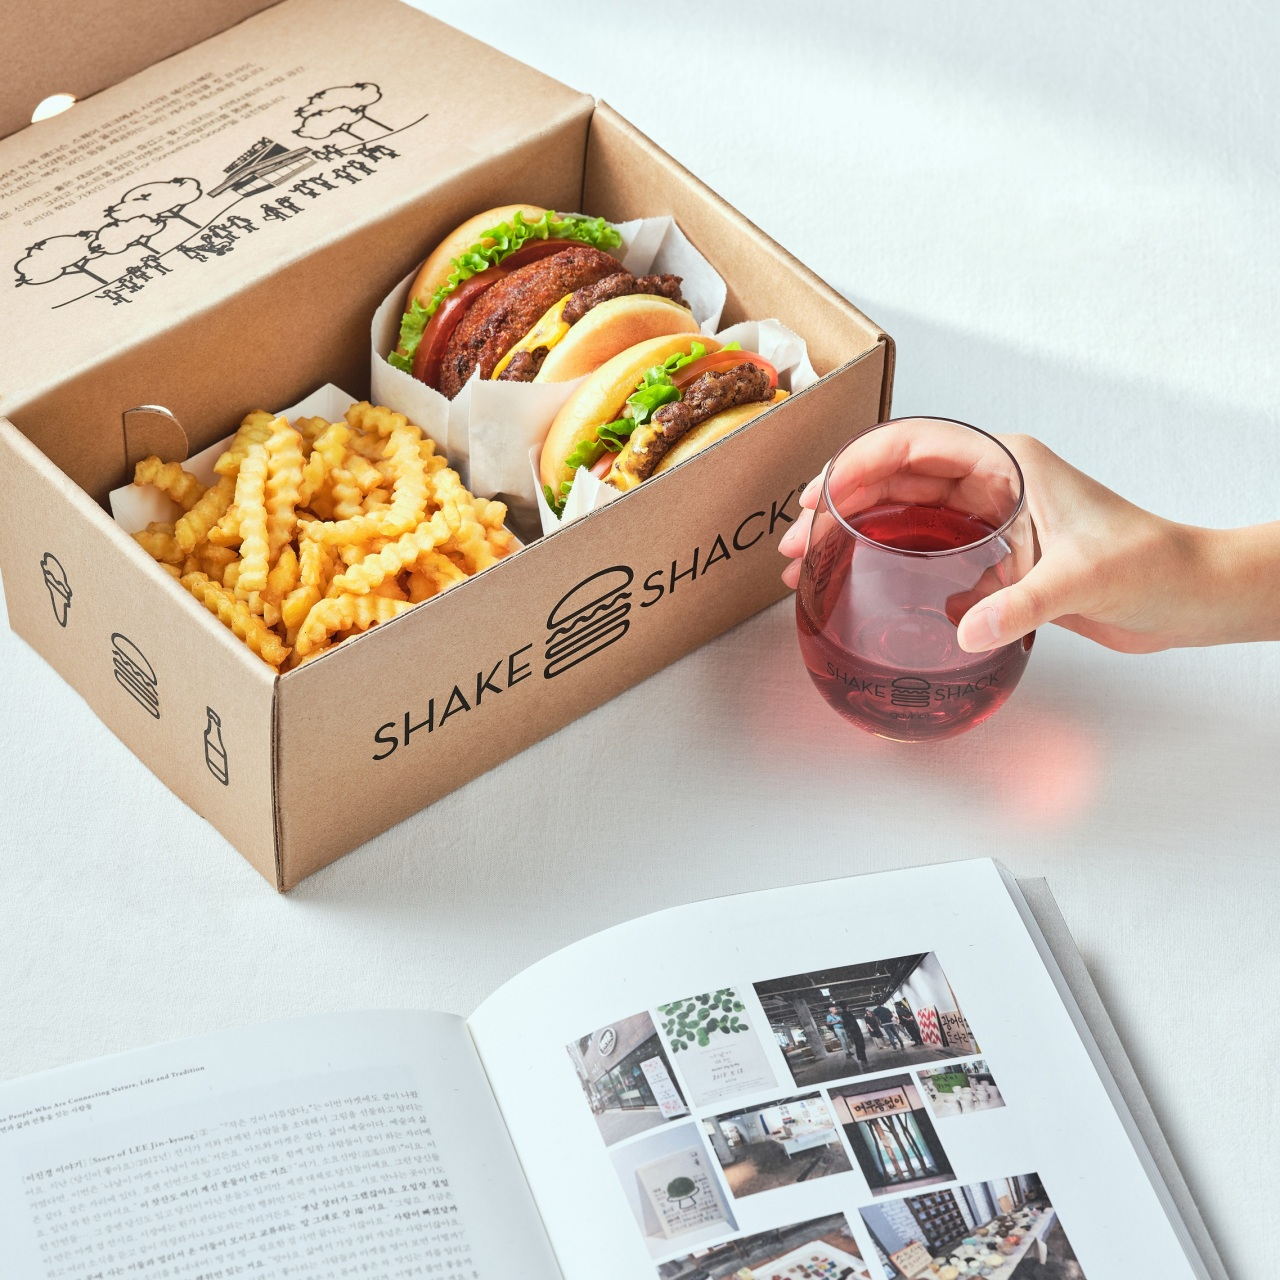 Caja de papel de empaquetado de la hamburguesa de Bamburger de la cartulina de la categoría alimenticia disponible de encargo